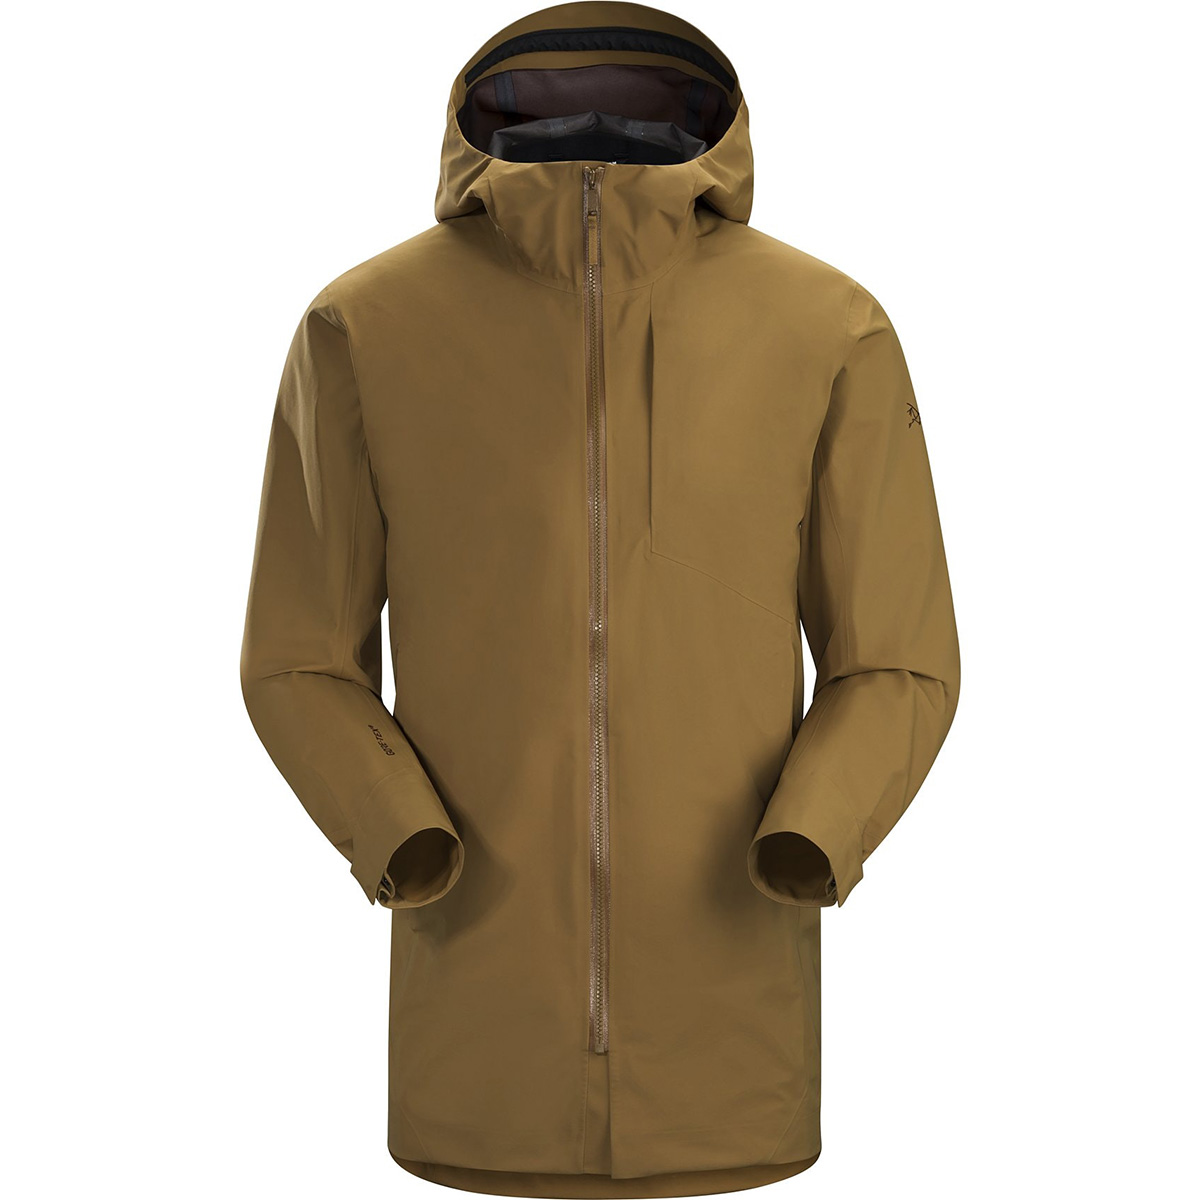 Arc'teryx Sawyer Coat, men's, discontinued Fall 2019 colors (free ...